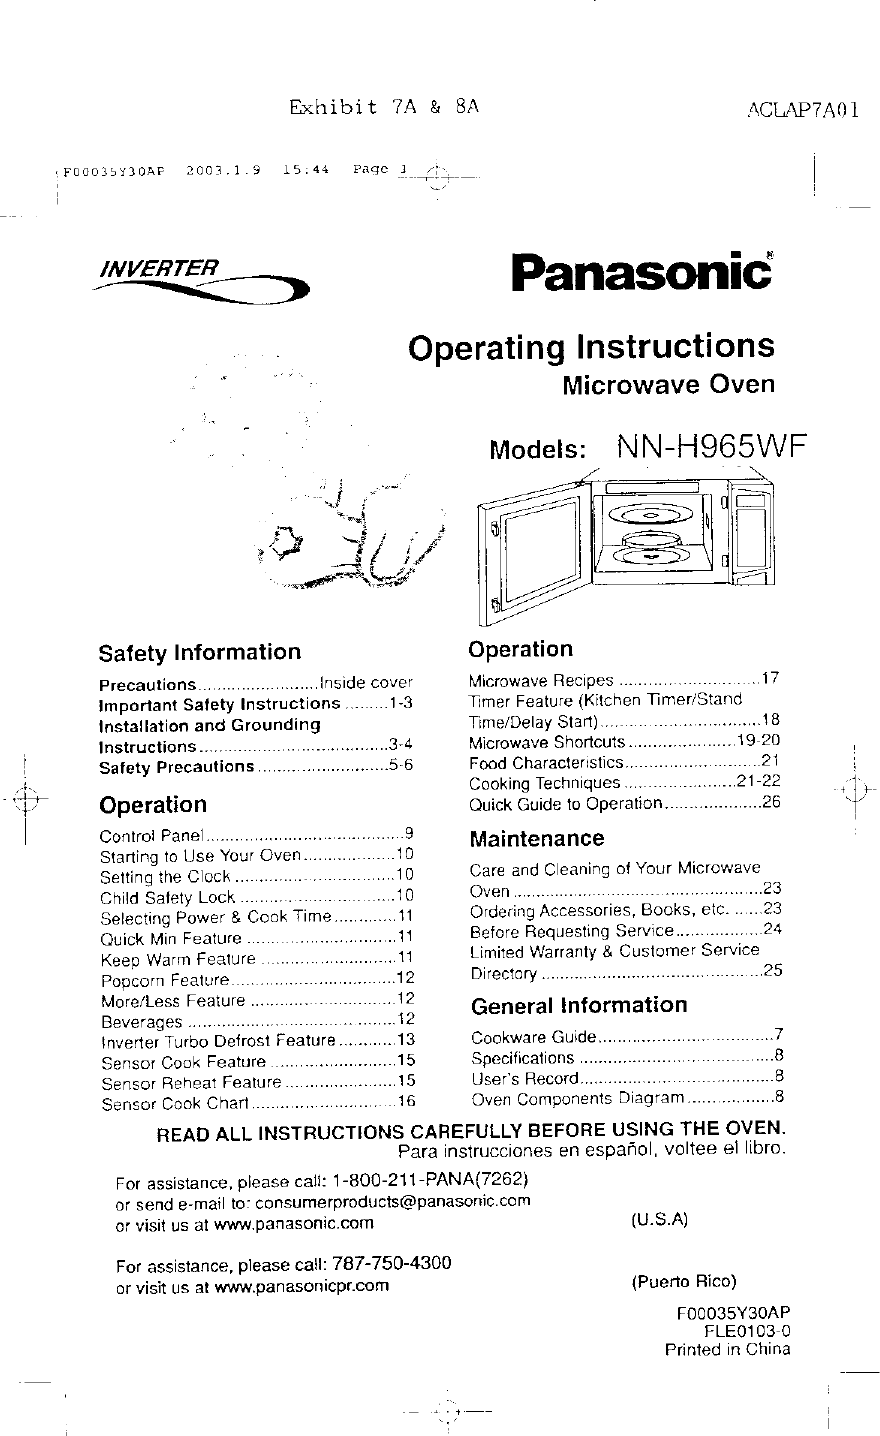 panasonic microwave operating instructions